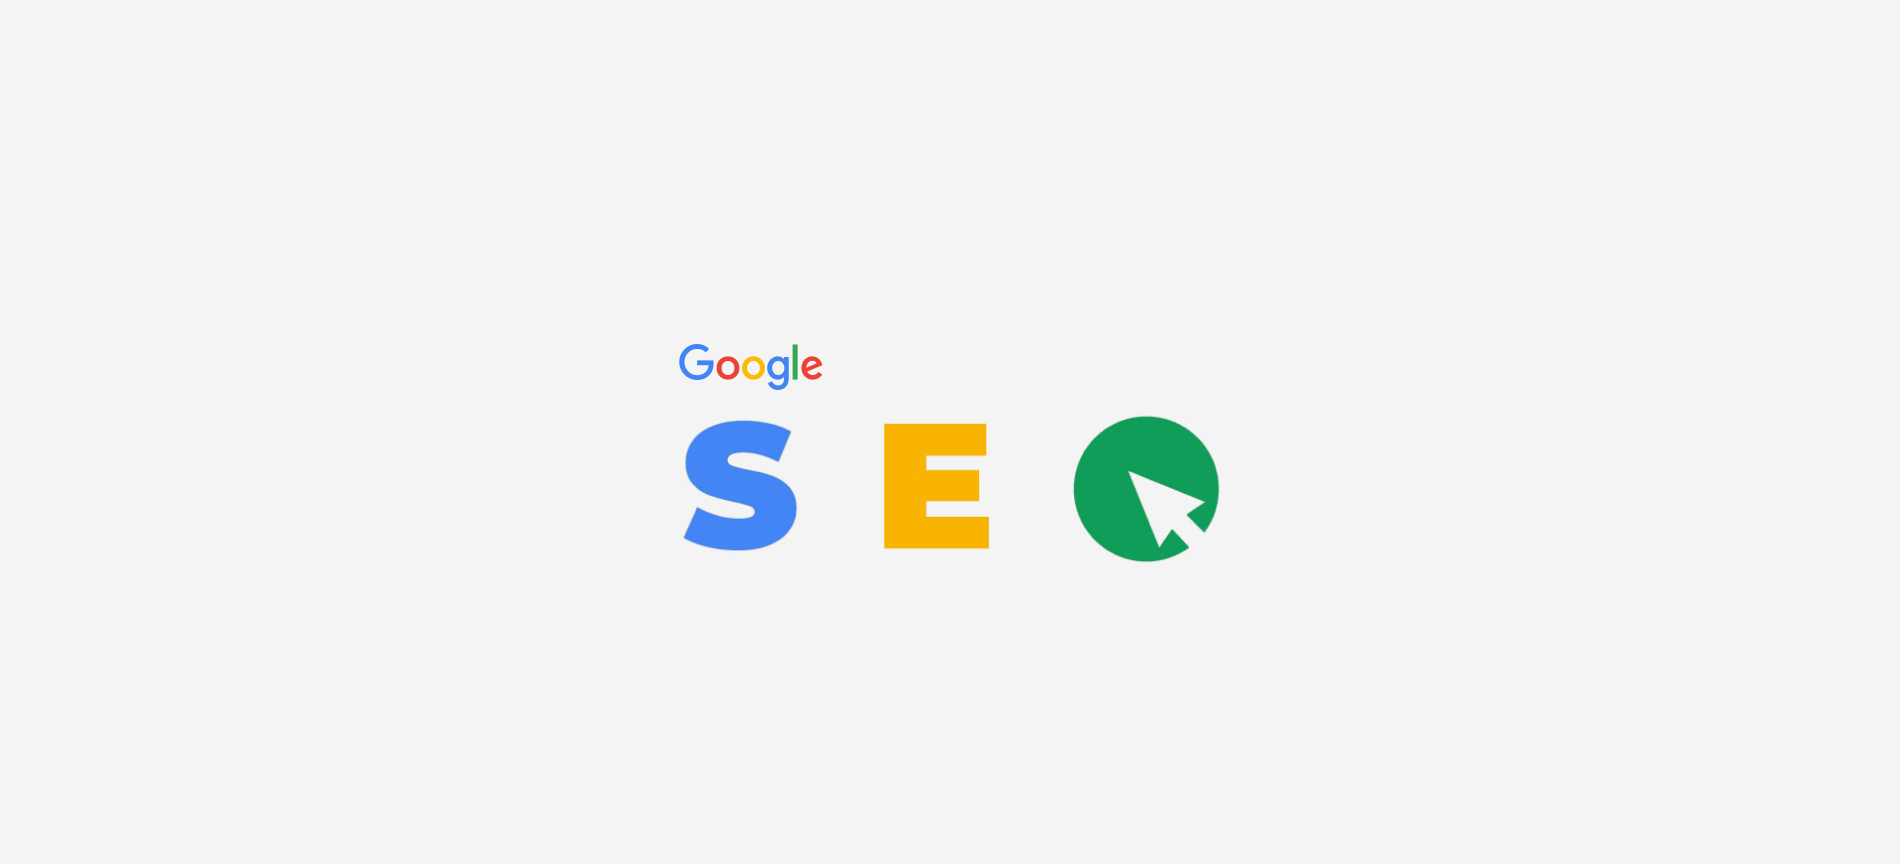 How to use Free Google SEO tools